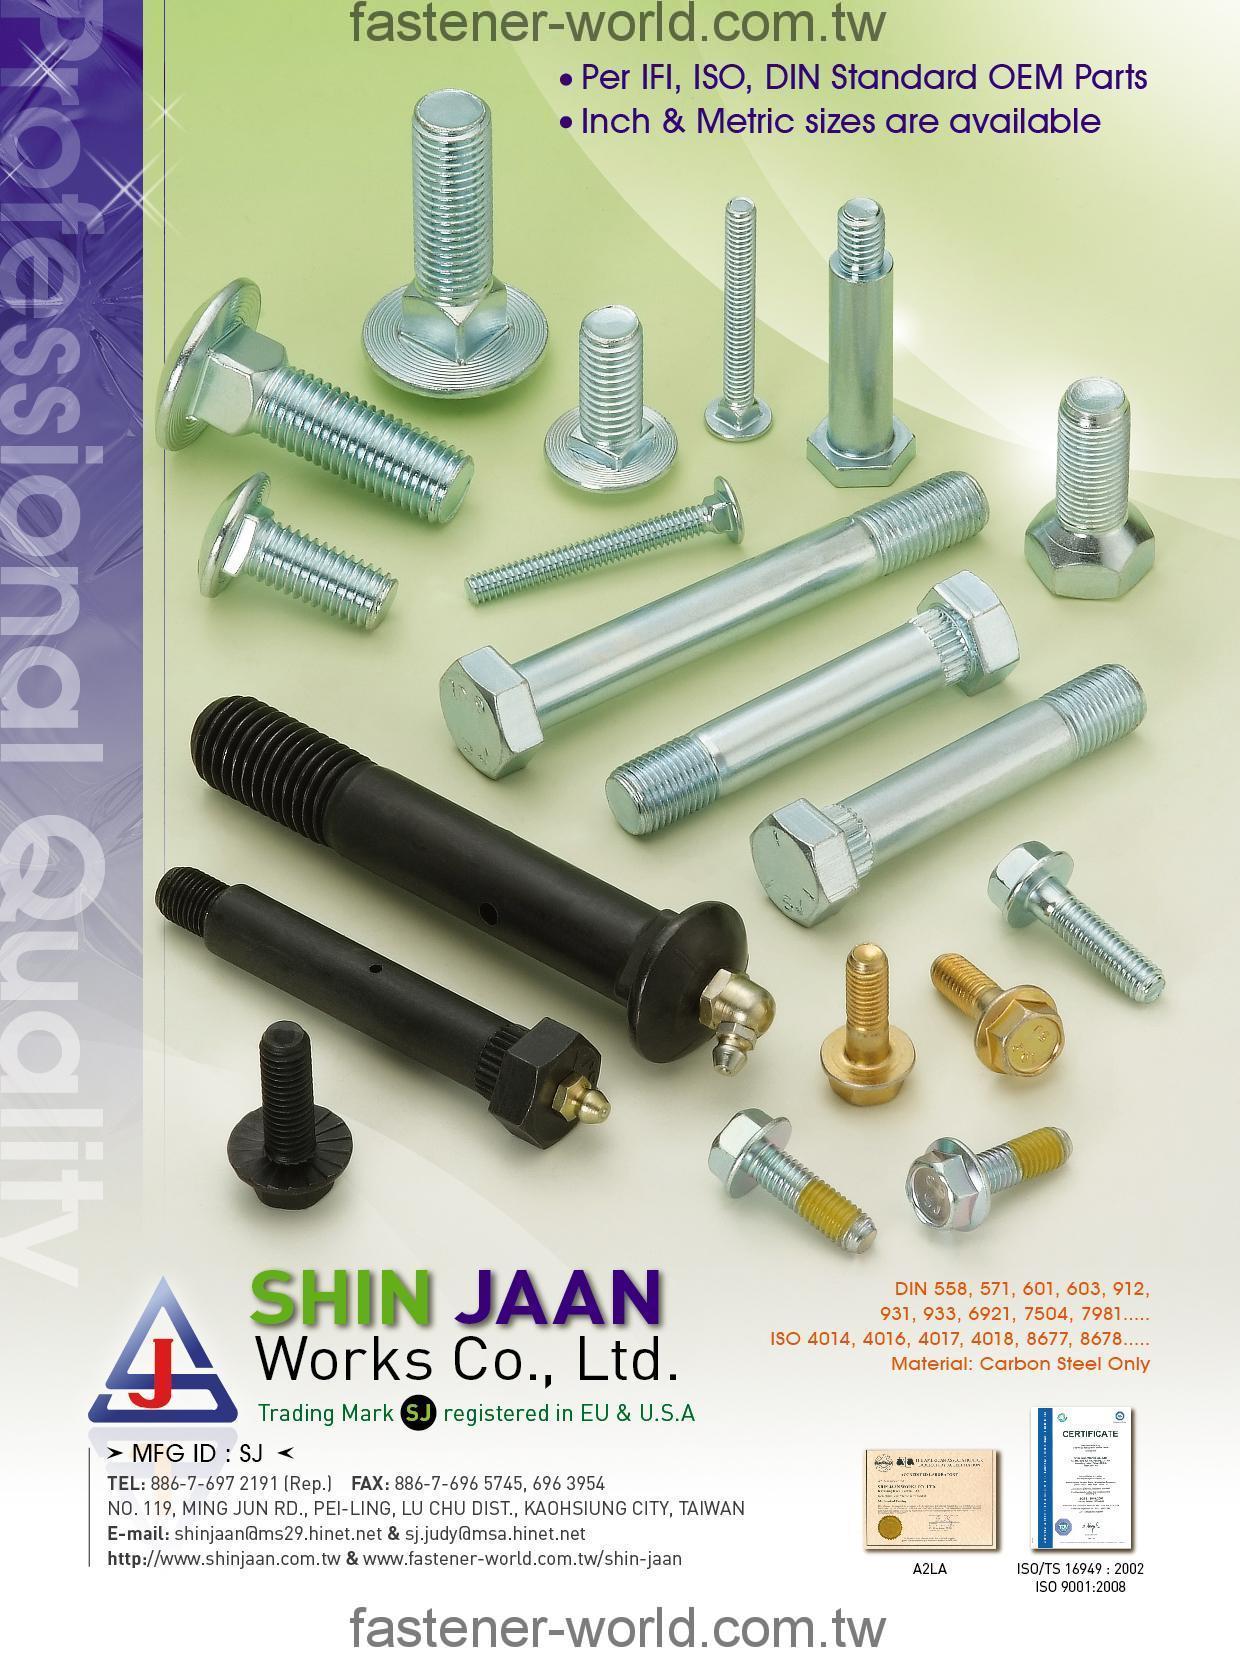 SHIN JAAN WORKS CO., LTD. _Online Catalogues